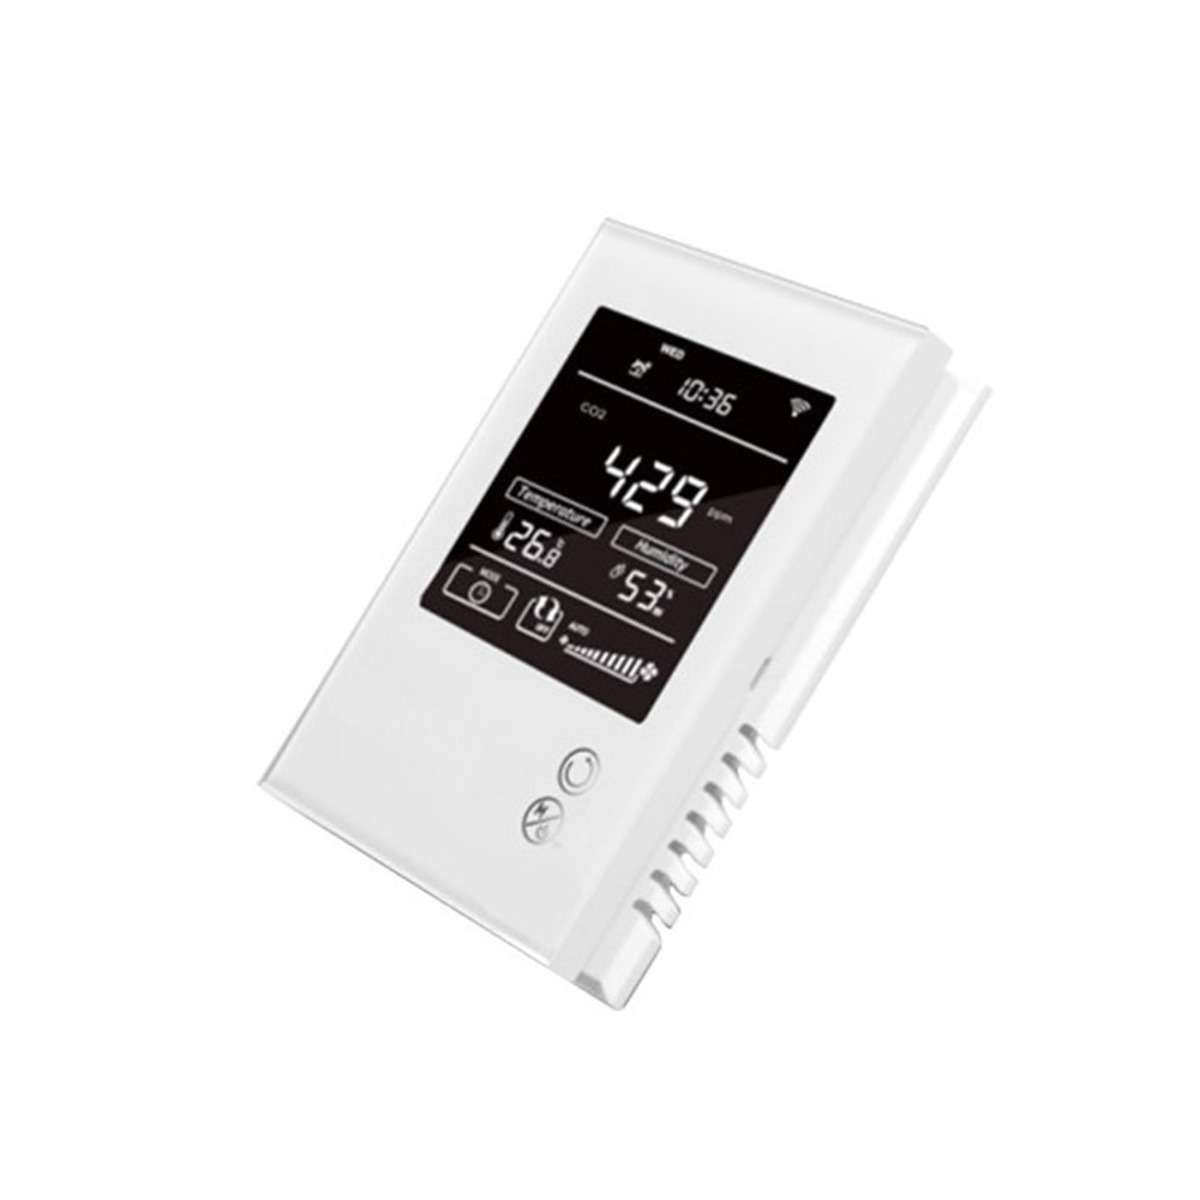 MCO HOME Temperatur- MCOEMH9-CO2 CO2-, Sensor Weiß 12VDC- HOME - und MCO Feuchtigkeitssensor